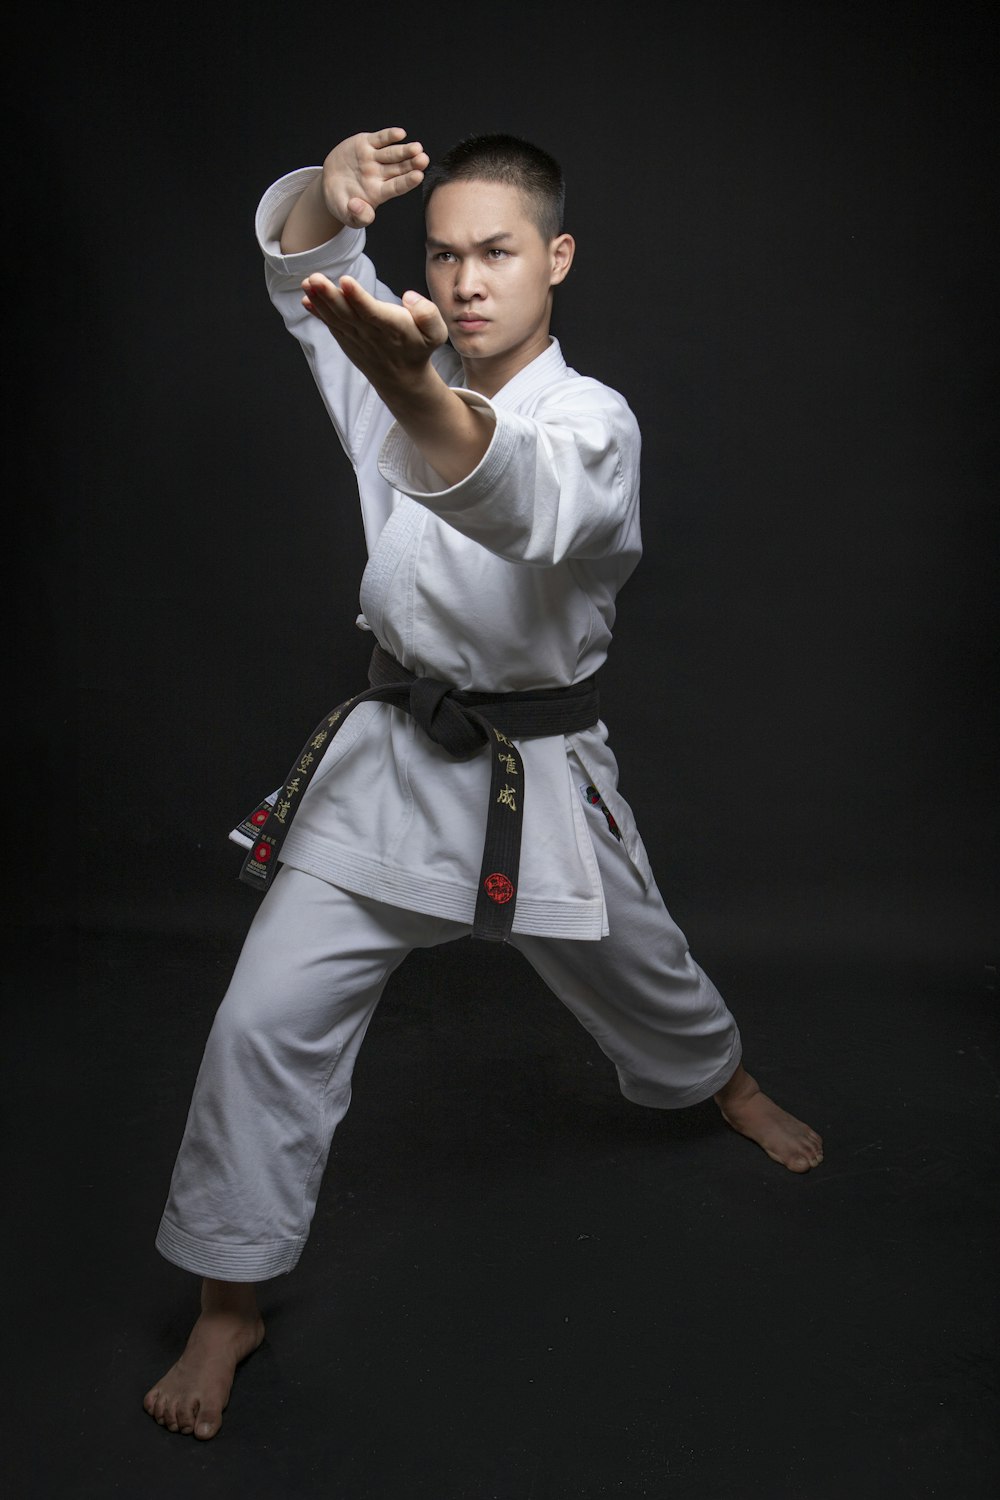 a person in a karate uniform